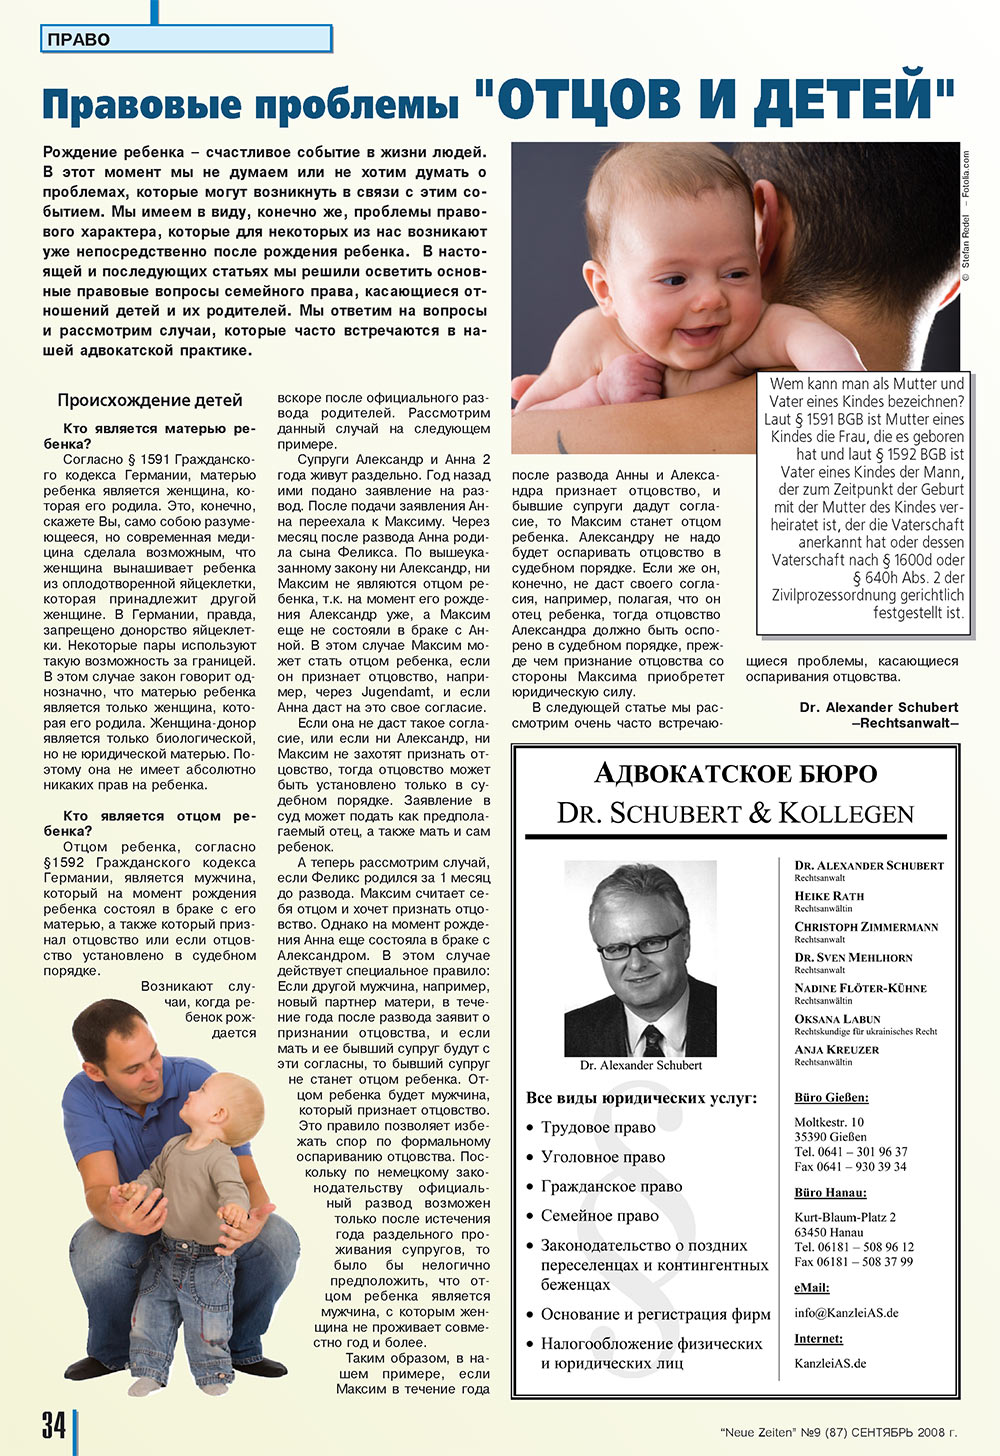 Neue Zeiten (журнал). 2008 год, номер 9, стр. 34